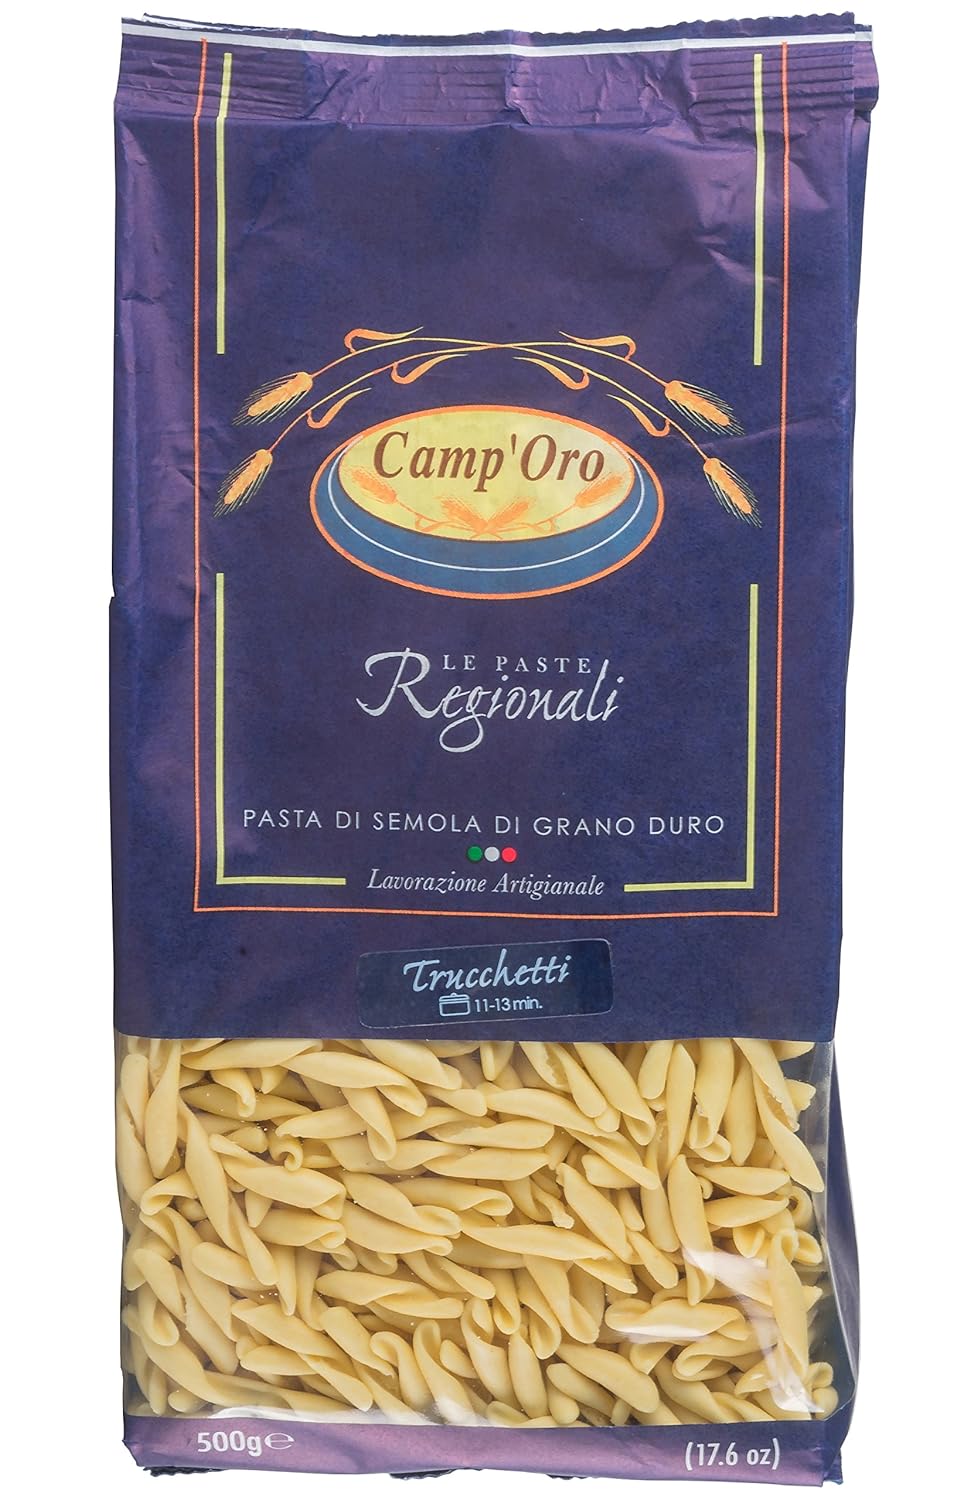 Camp'Oro Le Regionali Trucchetti Pasta Pack of 20 (16 Ounce) Bag